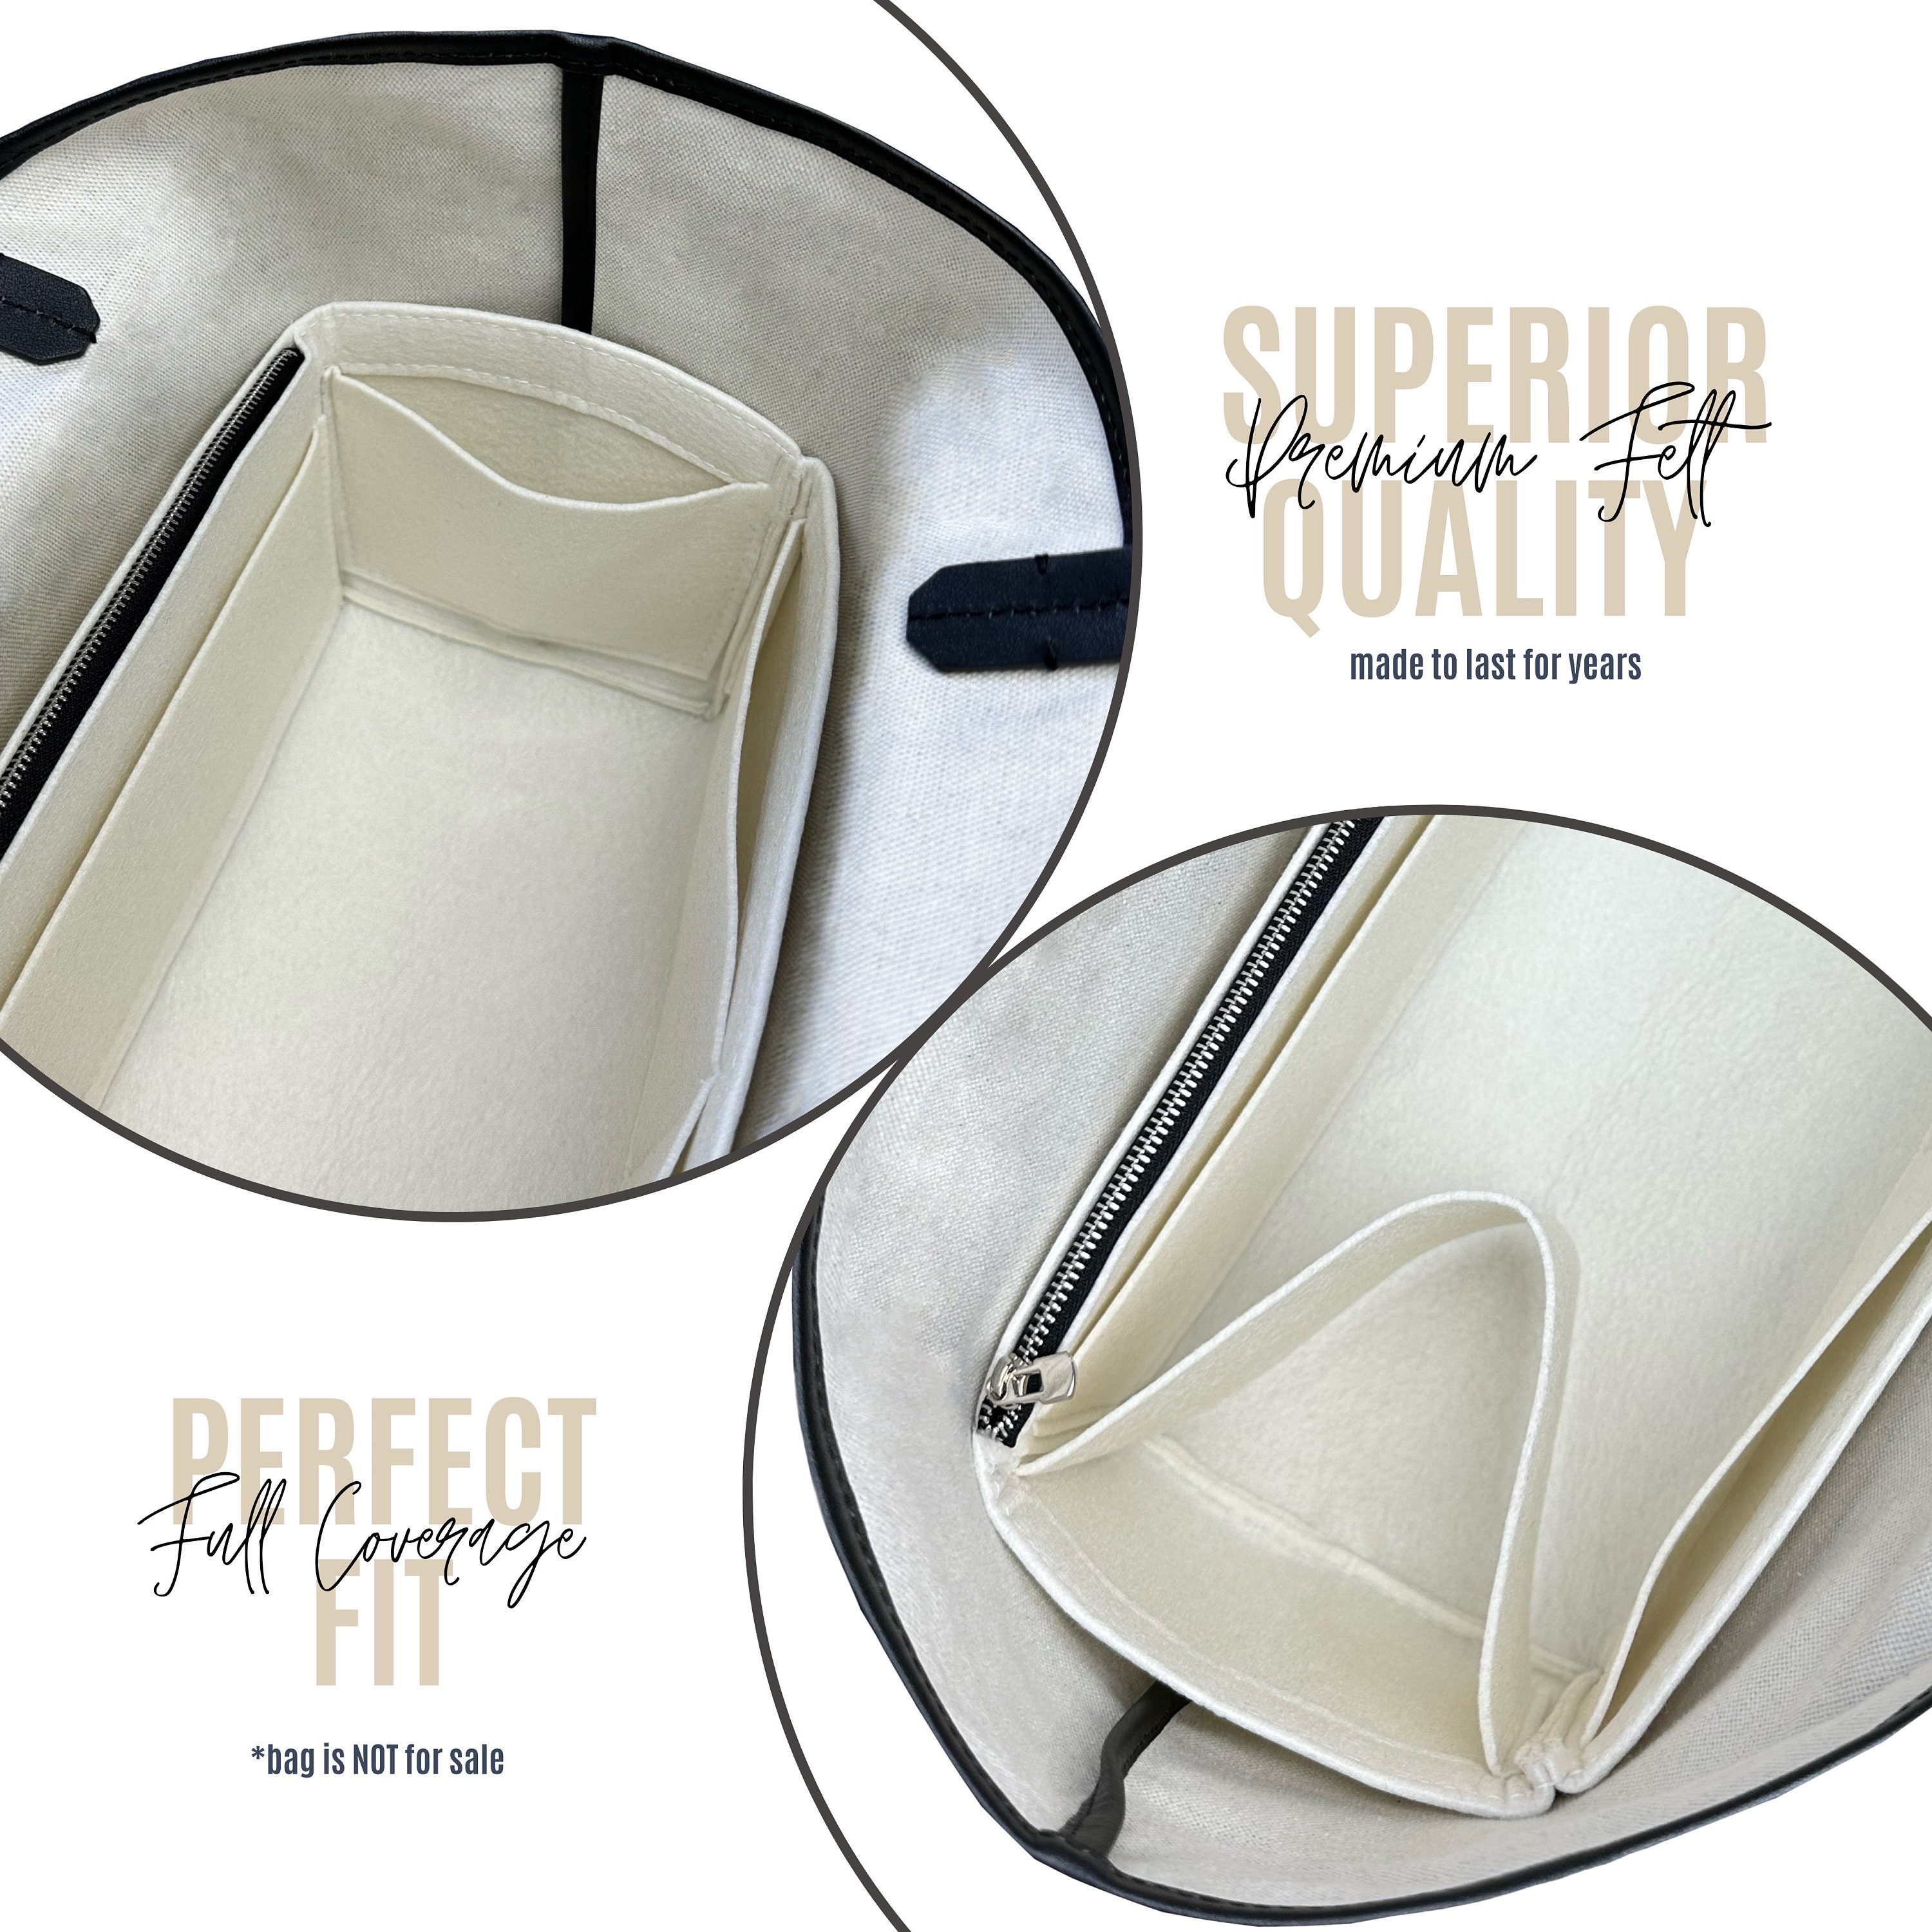  Bag Insert Bag Organiser for Goyard Vert Cap PM (Grey) :  Clothing, Shoes & Jewelry